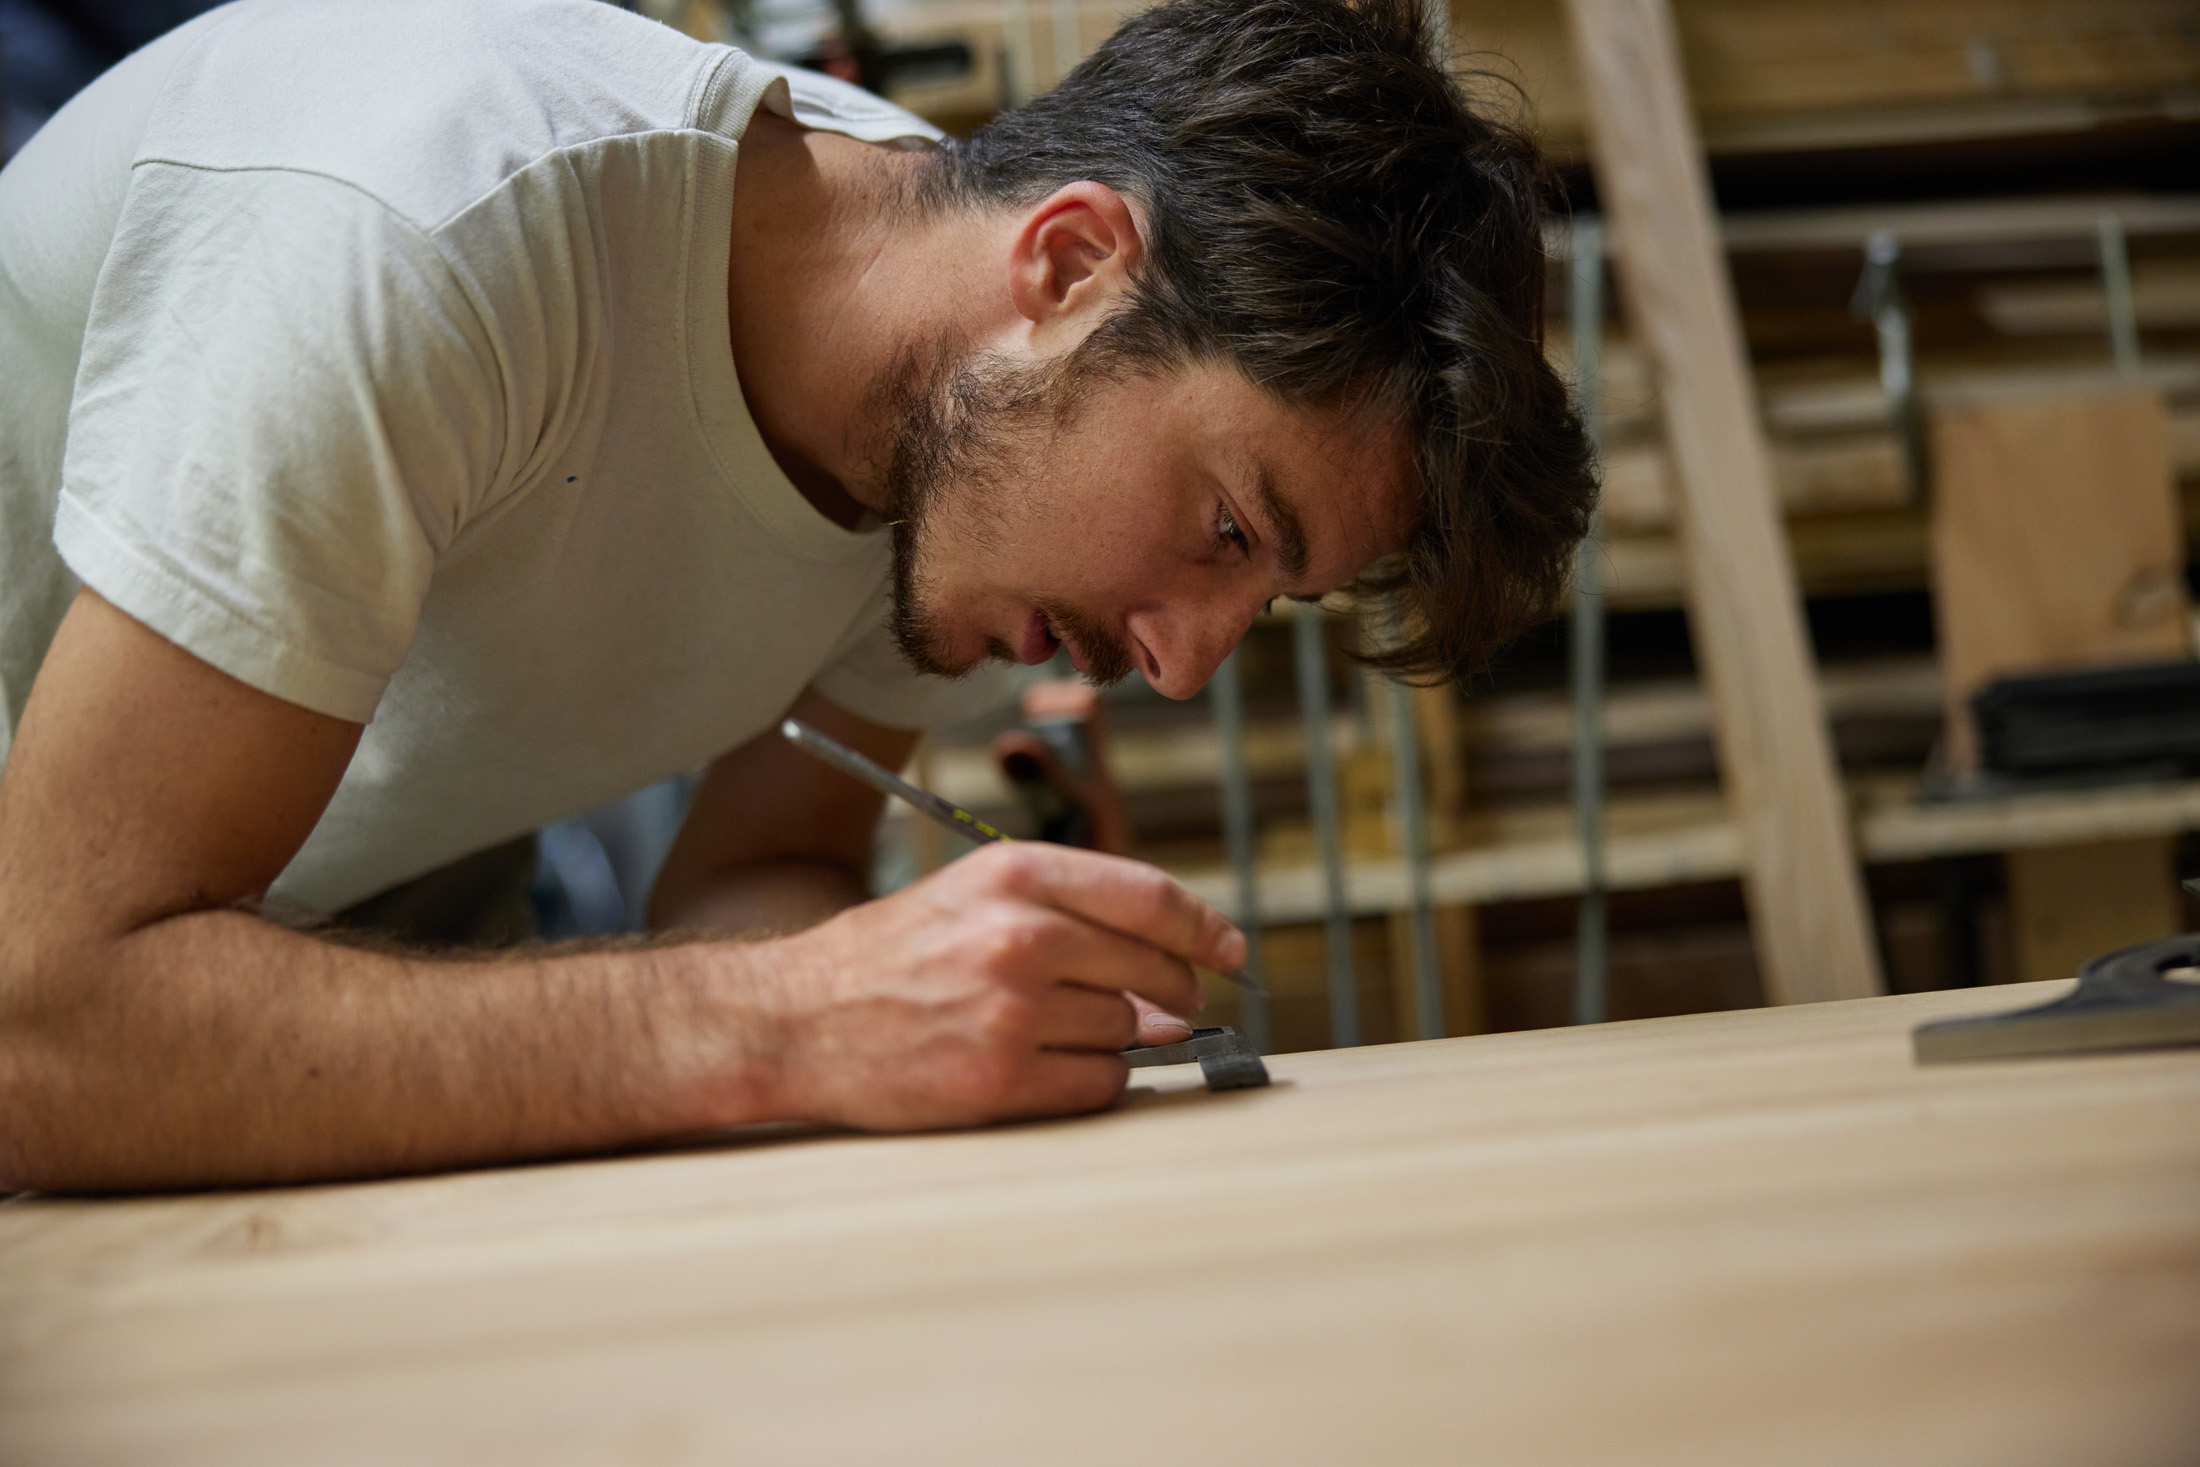 A man carefully marks a plank of wood